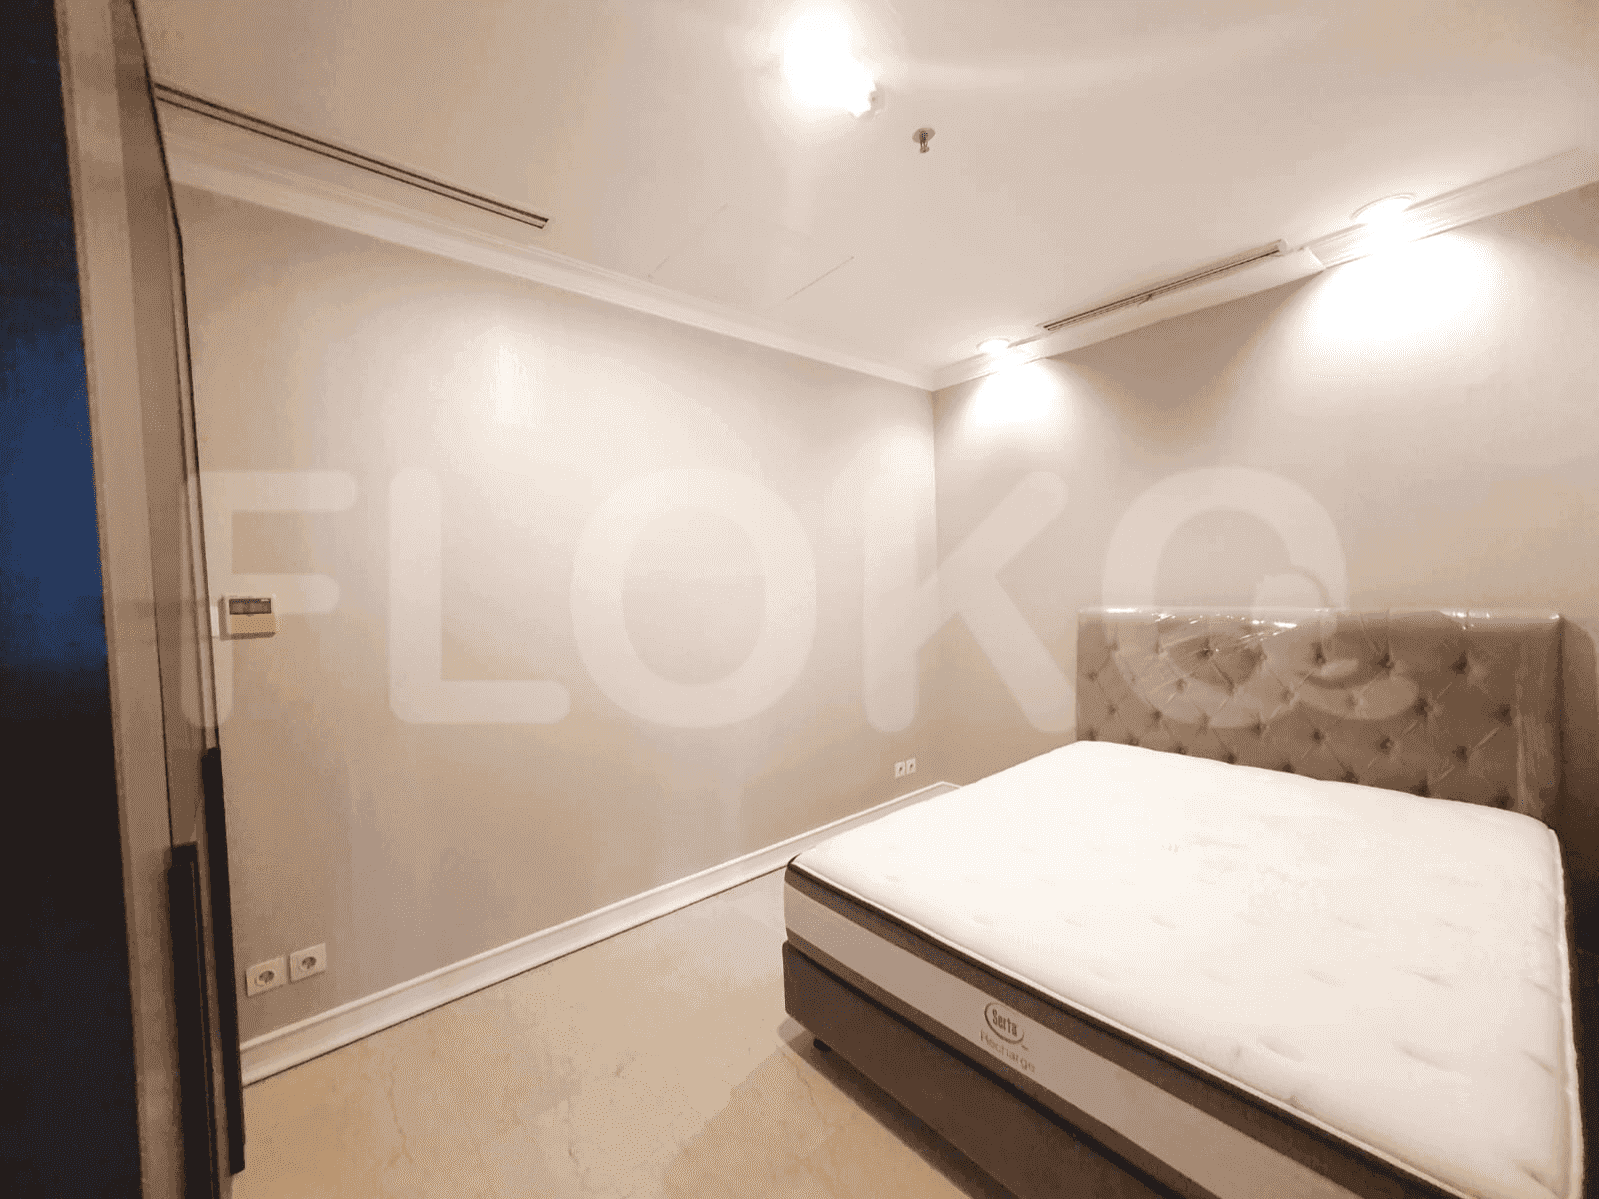 3 Bedroom on 31st Floor for Rent in KempinskI Grand Indonesia Apartment - fmed36 5